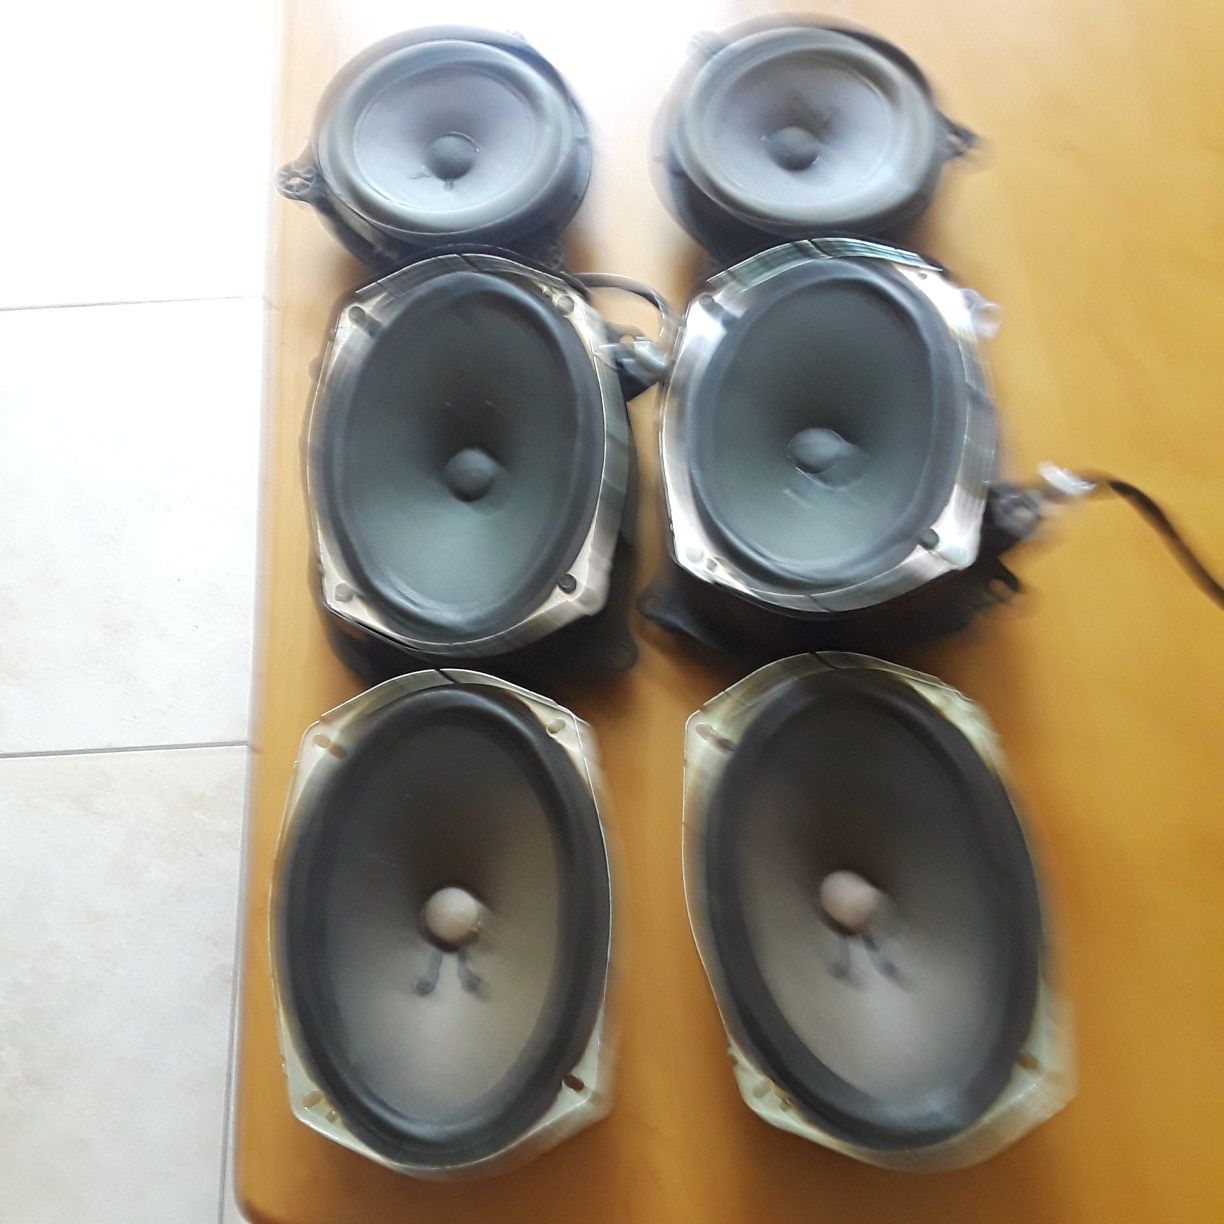 Boss speakers